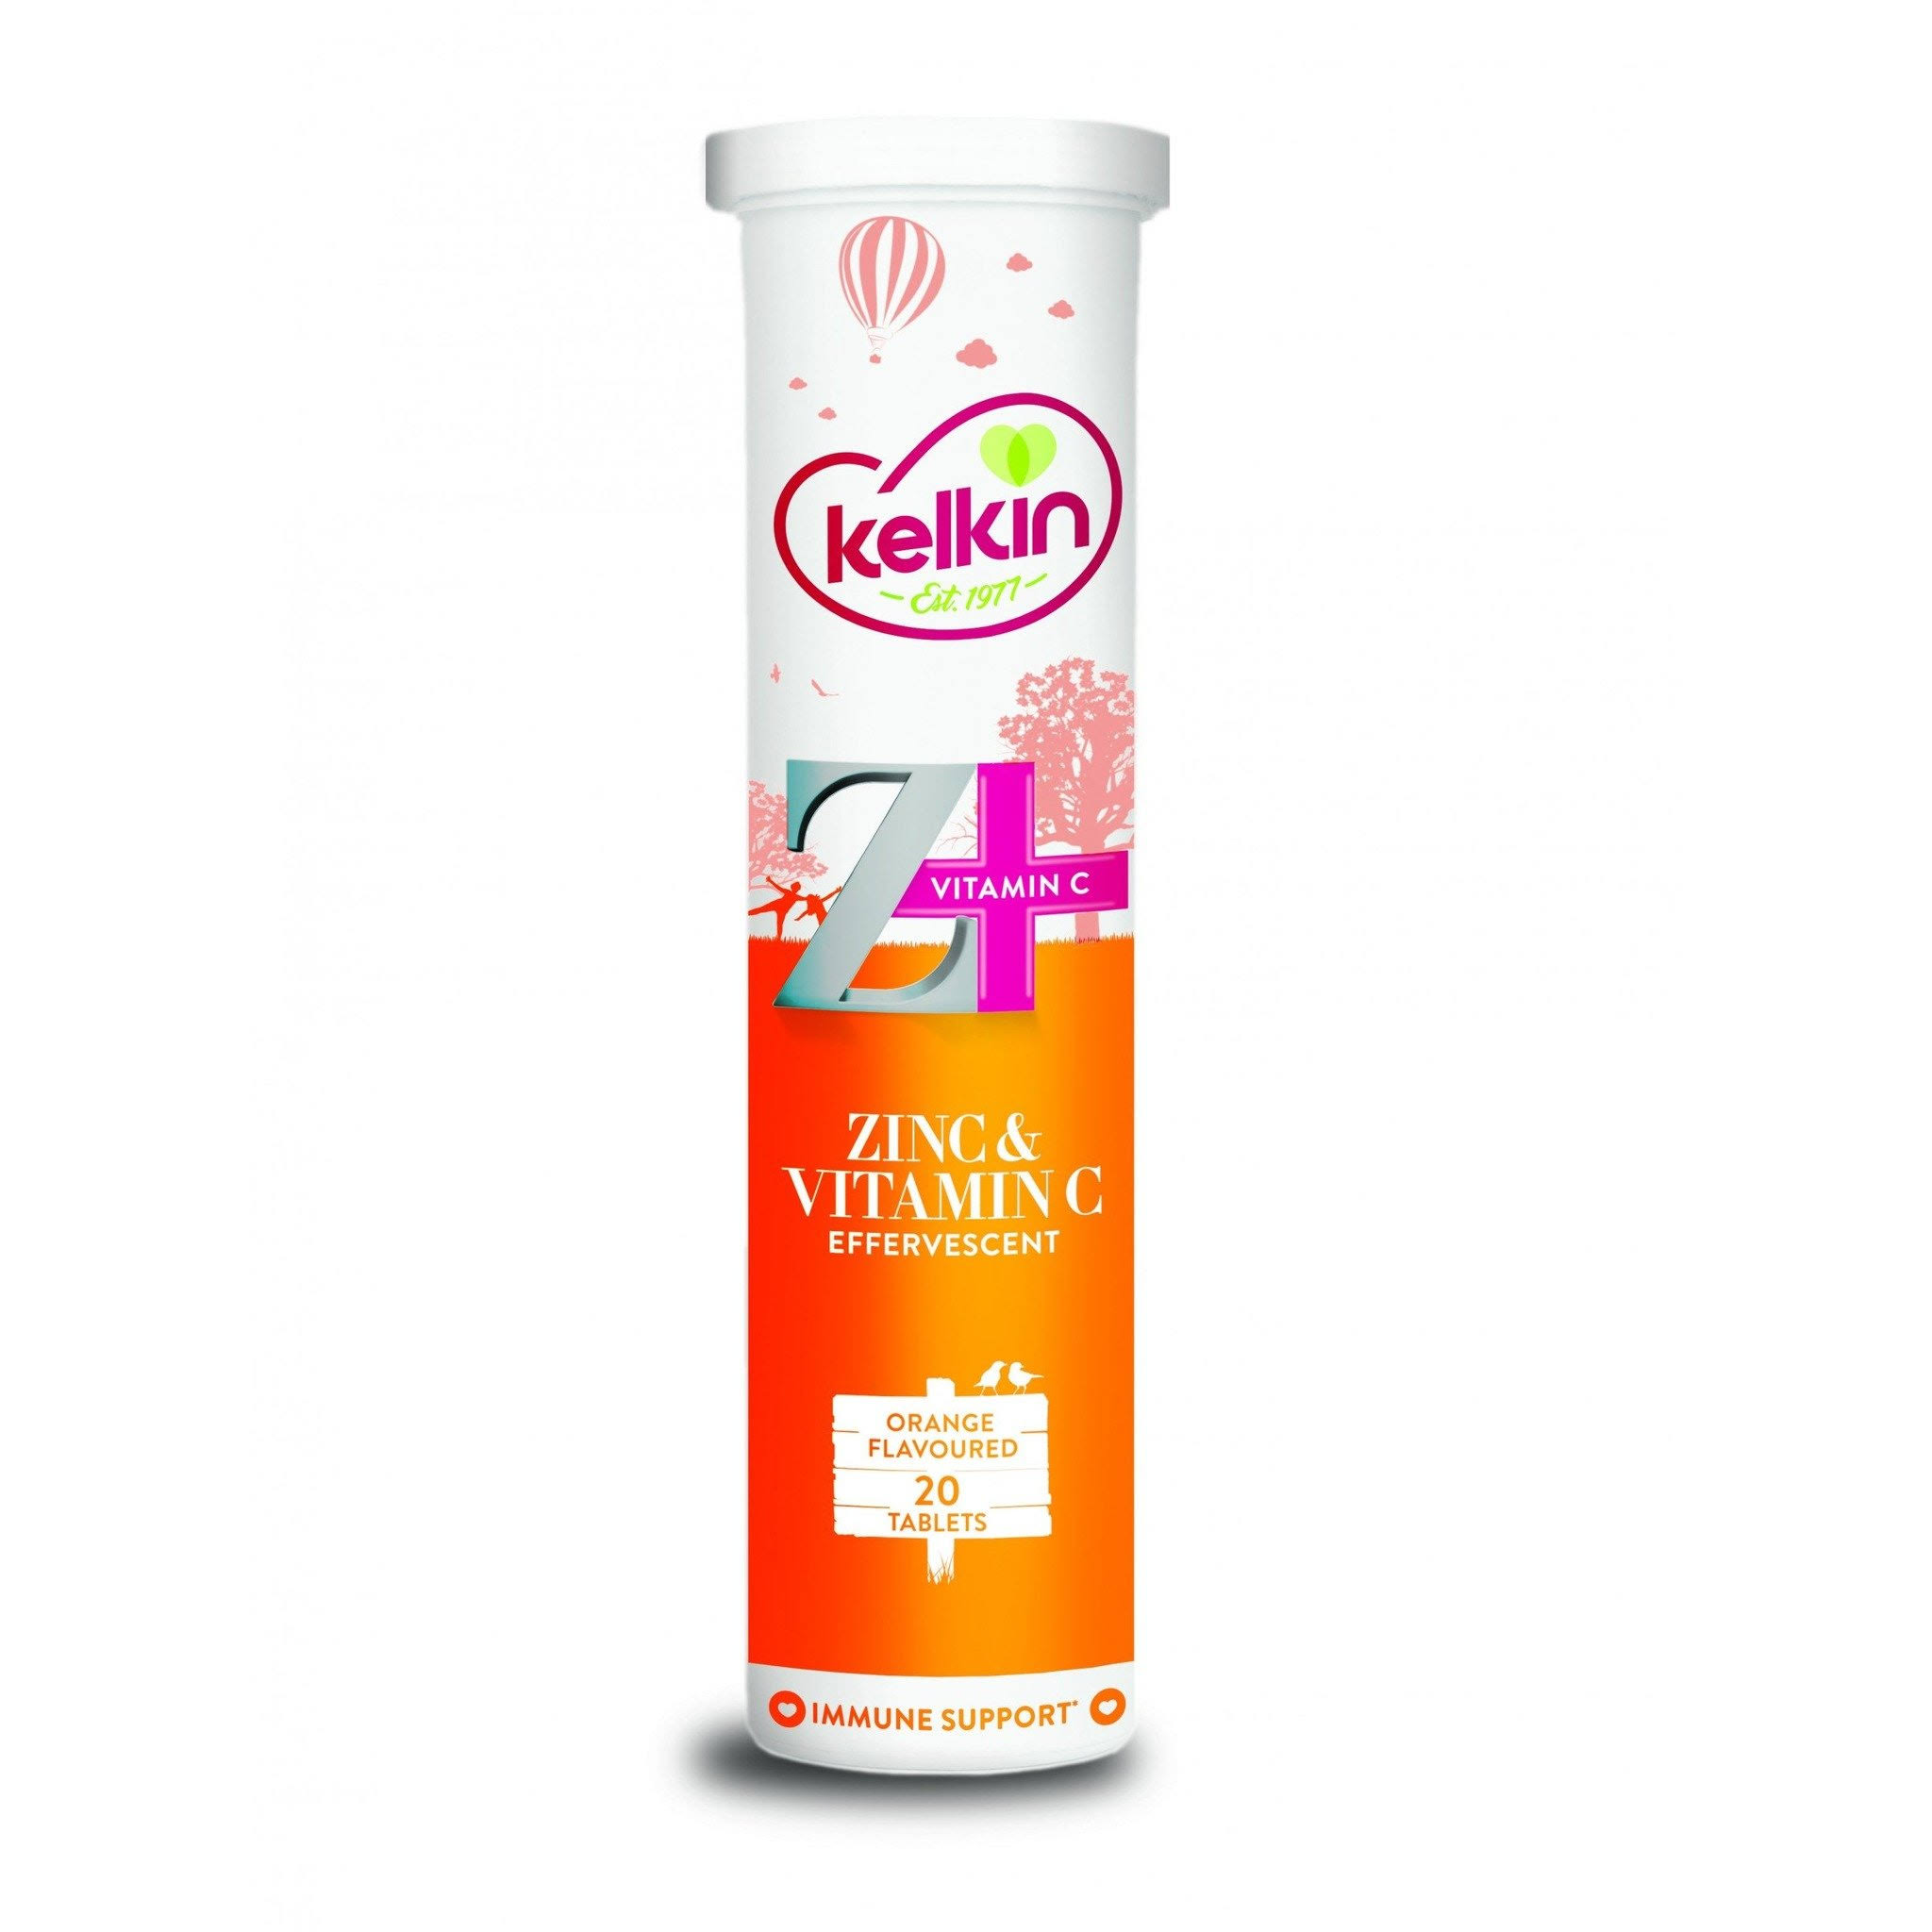 Kelkin Zinc and Vitamin C Effervescent Tablets - Orange Flavored, 20pk